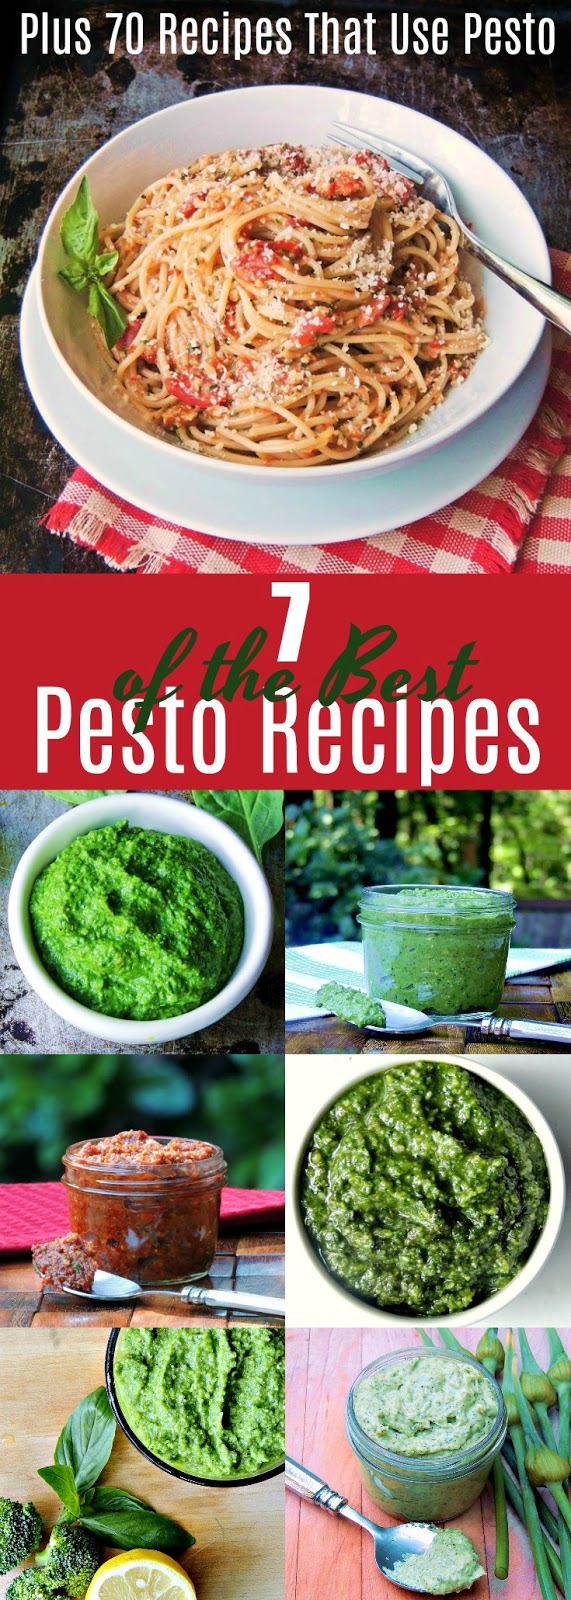 7 of the Best Pesto Recipes PLUS 70 Recipe Ideas That Use Pesto. #lowcarb #keto #easy #recipe #recipes #pesto | bobbiskozykitchen.com